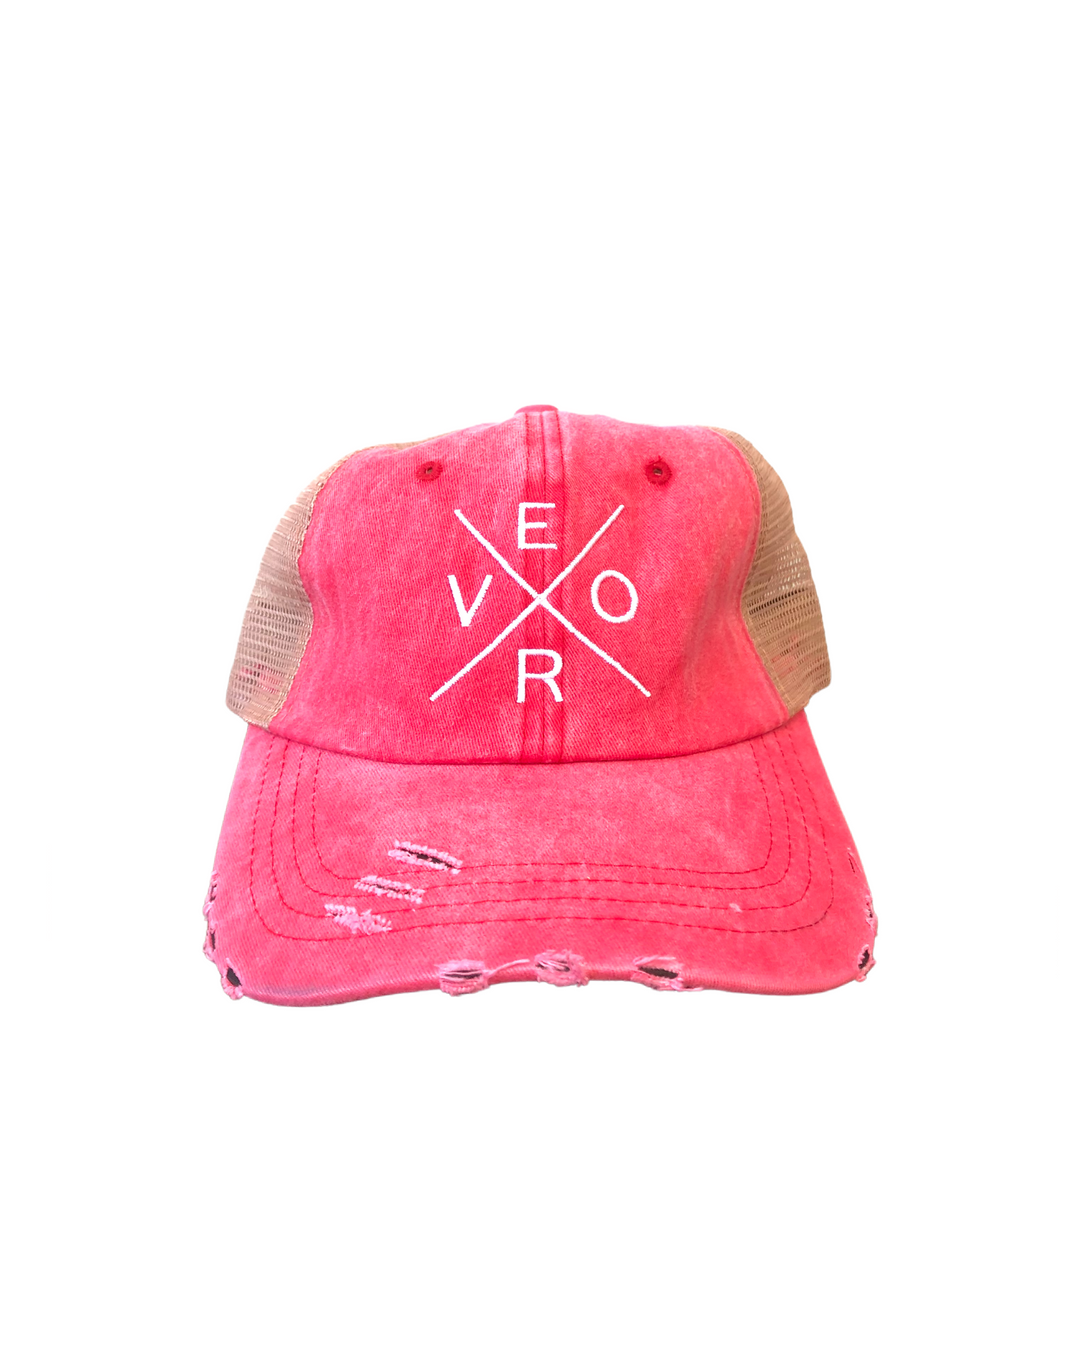 Vero Distressed Trucker Hat - Coral & Khaki